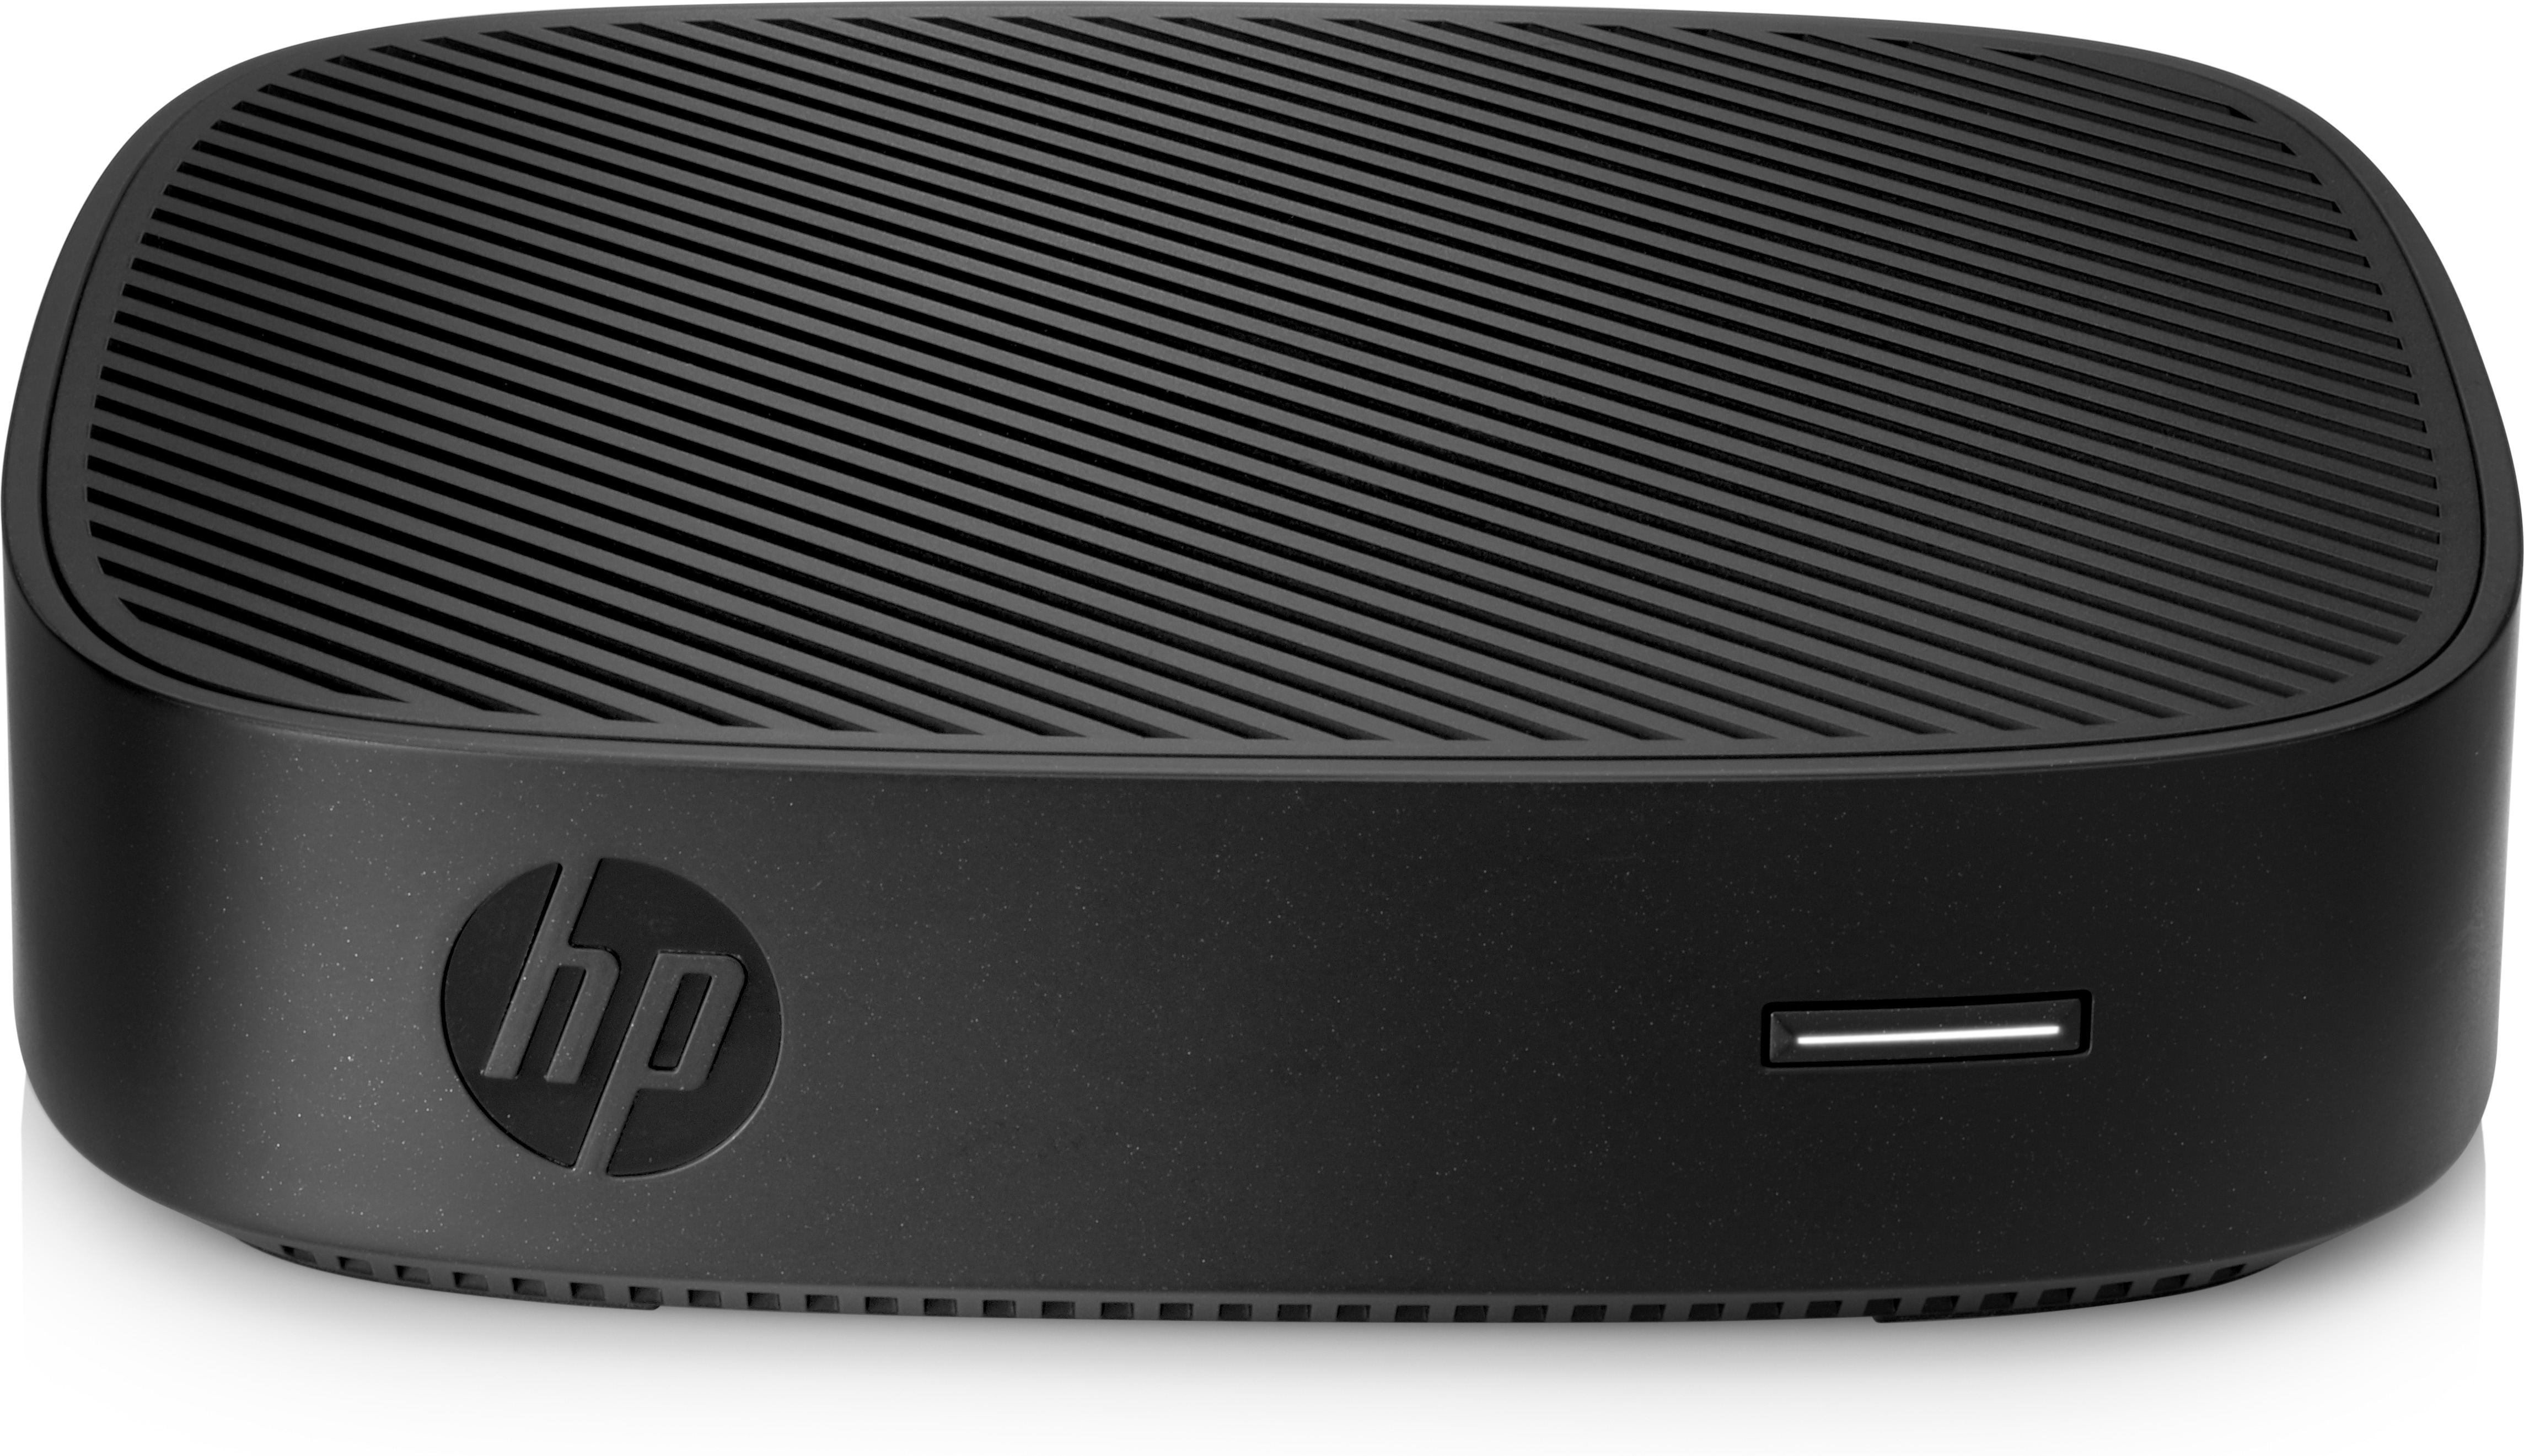 HP t430 - Thin client - DTS - 1 x Celeron N4000 / 1.1 GHz - RAM 4 GB - flash - eMMC 32 GB - UHD Graphics 600 - GigE - Win 10 IOT Enterprise 64-bit - monitor: none - keyboard: US